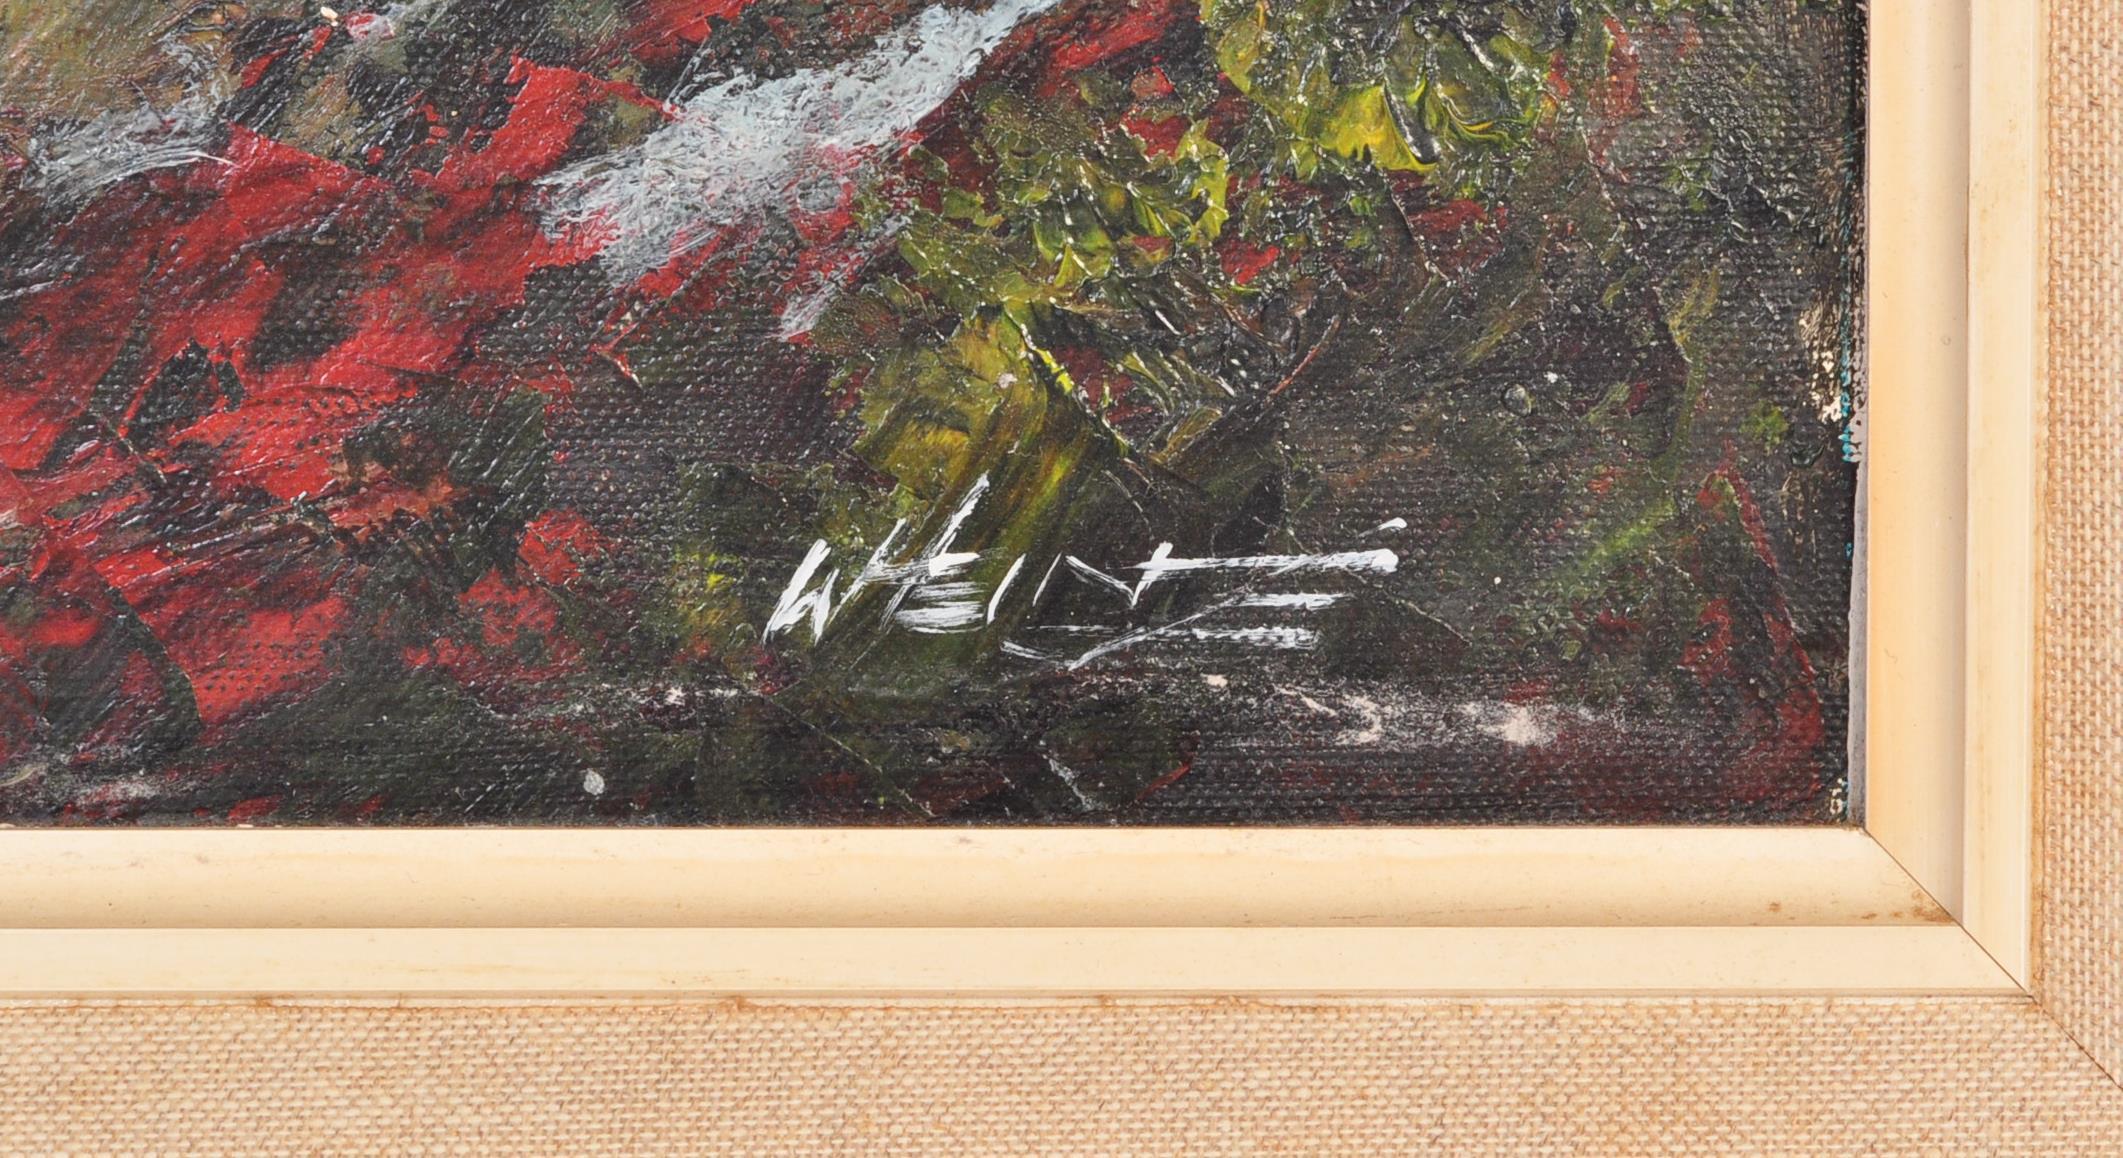 WOLFGANG HEINZ 'ALPINE SCENE' ORIGINAL SIGNED OIL ON CANVAS - Image 2 of 3